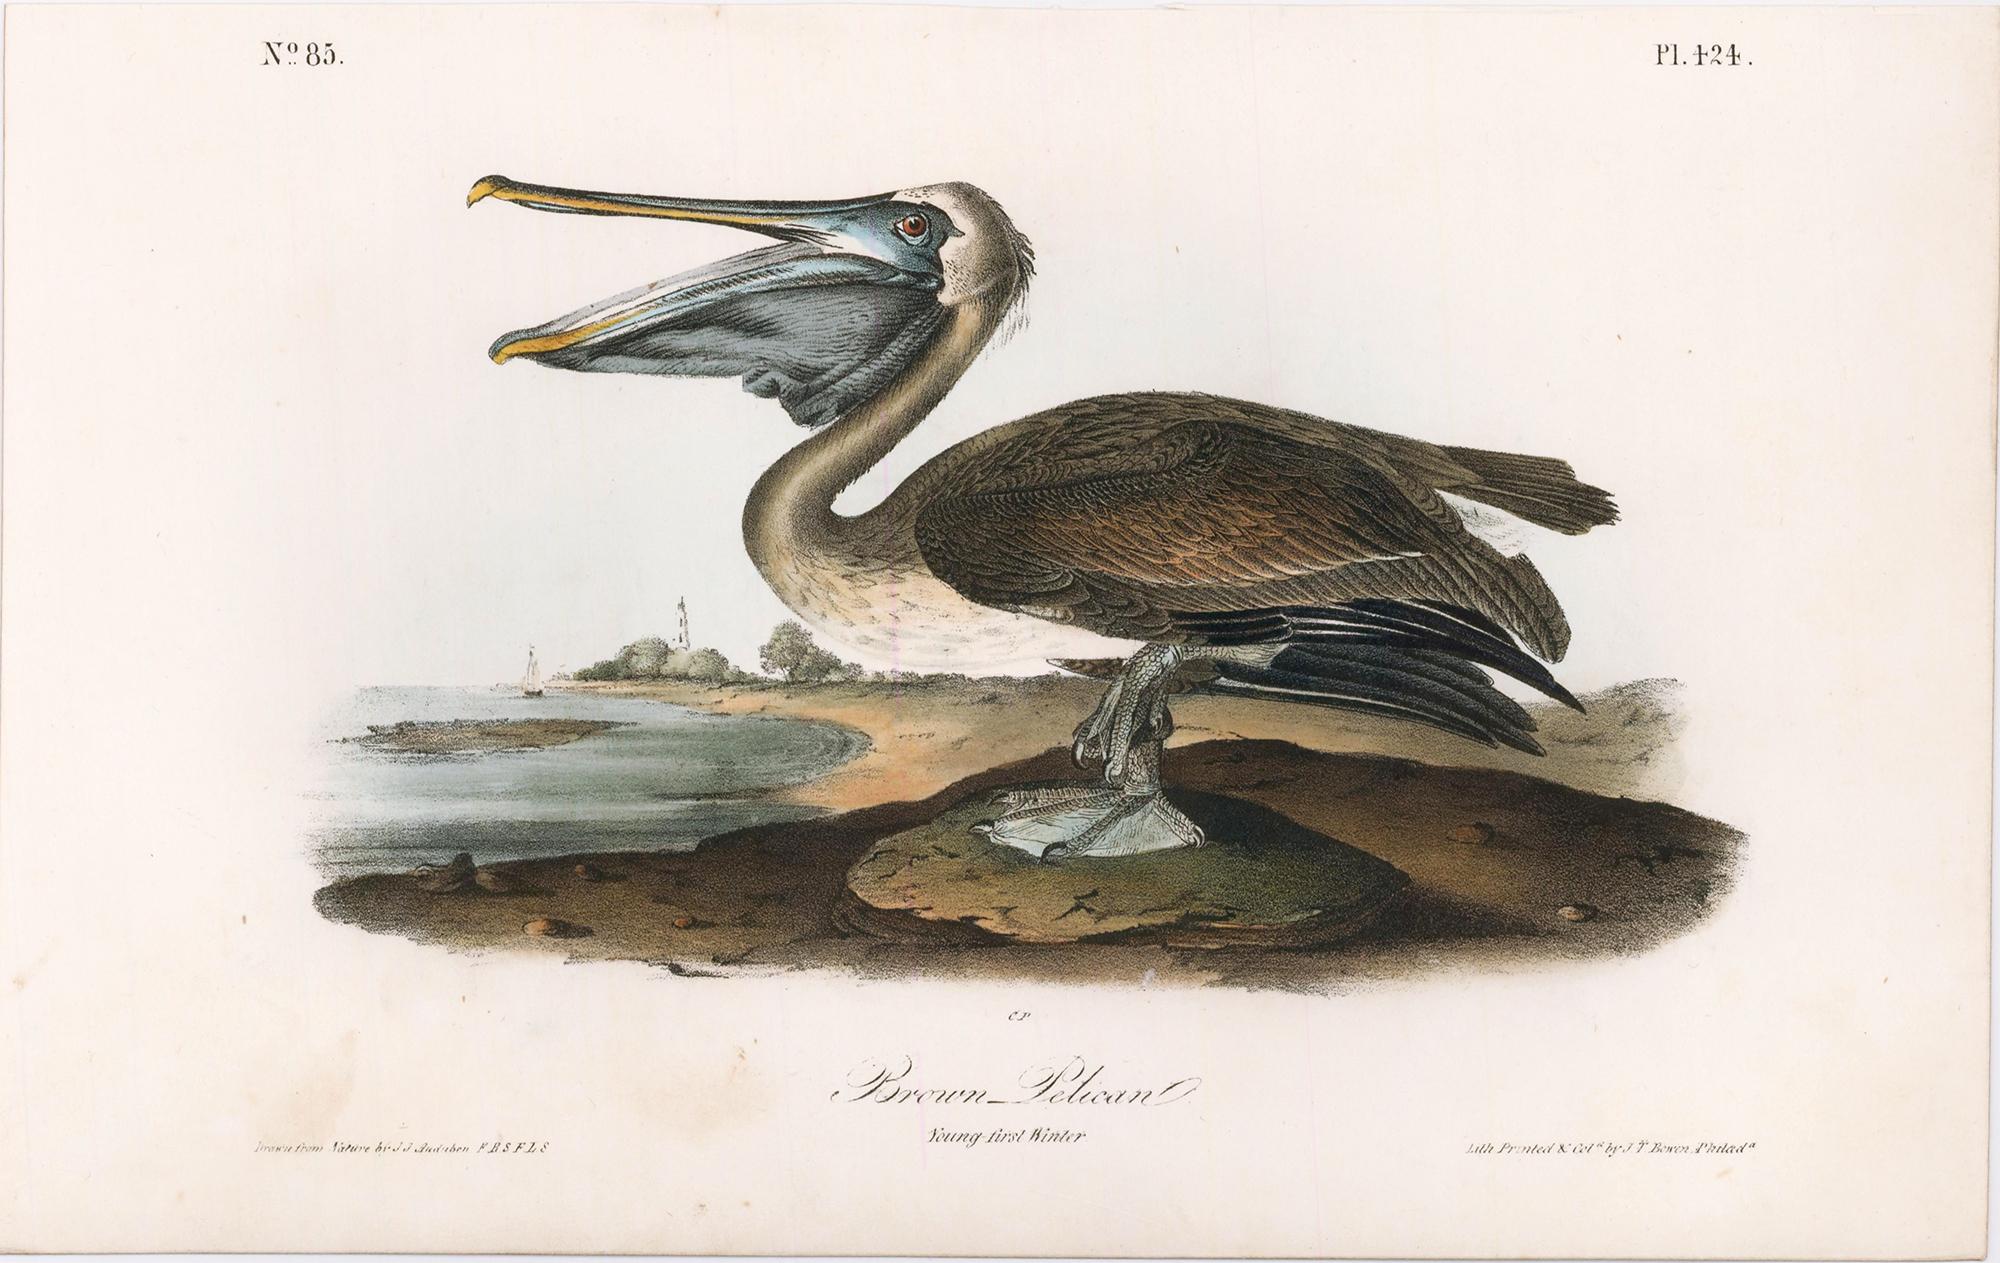 Pélican brun. - Print de John James Audubon